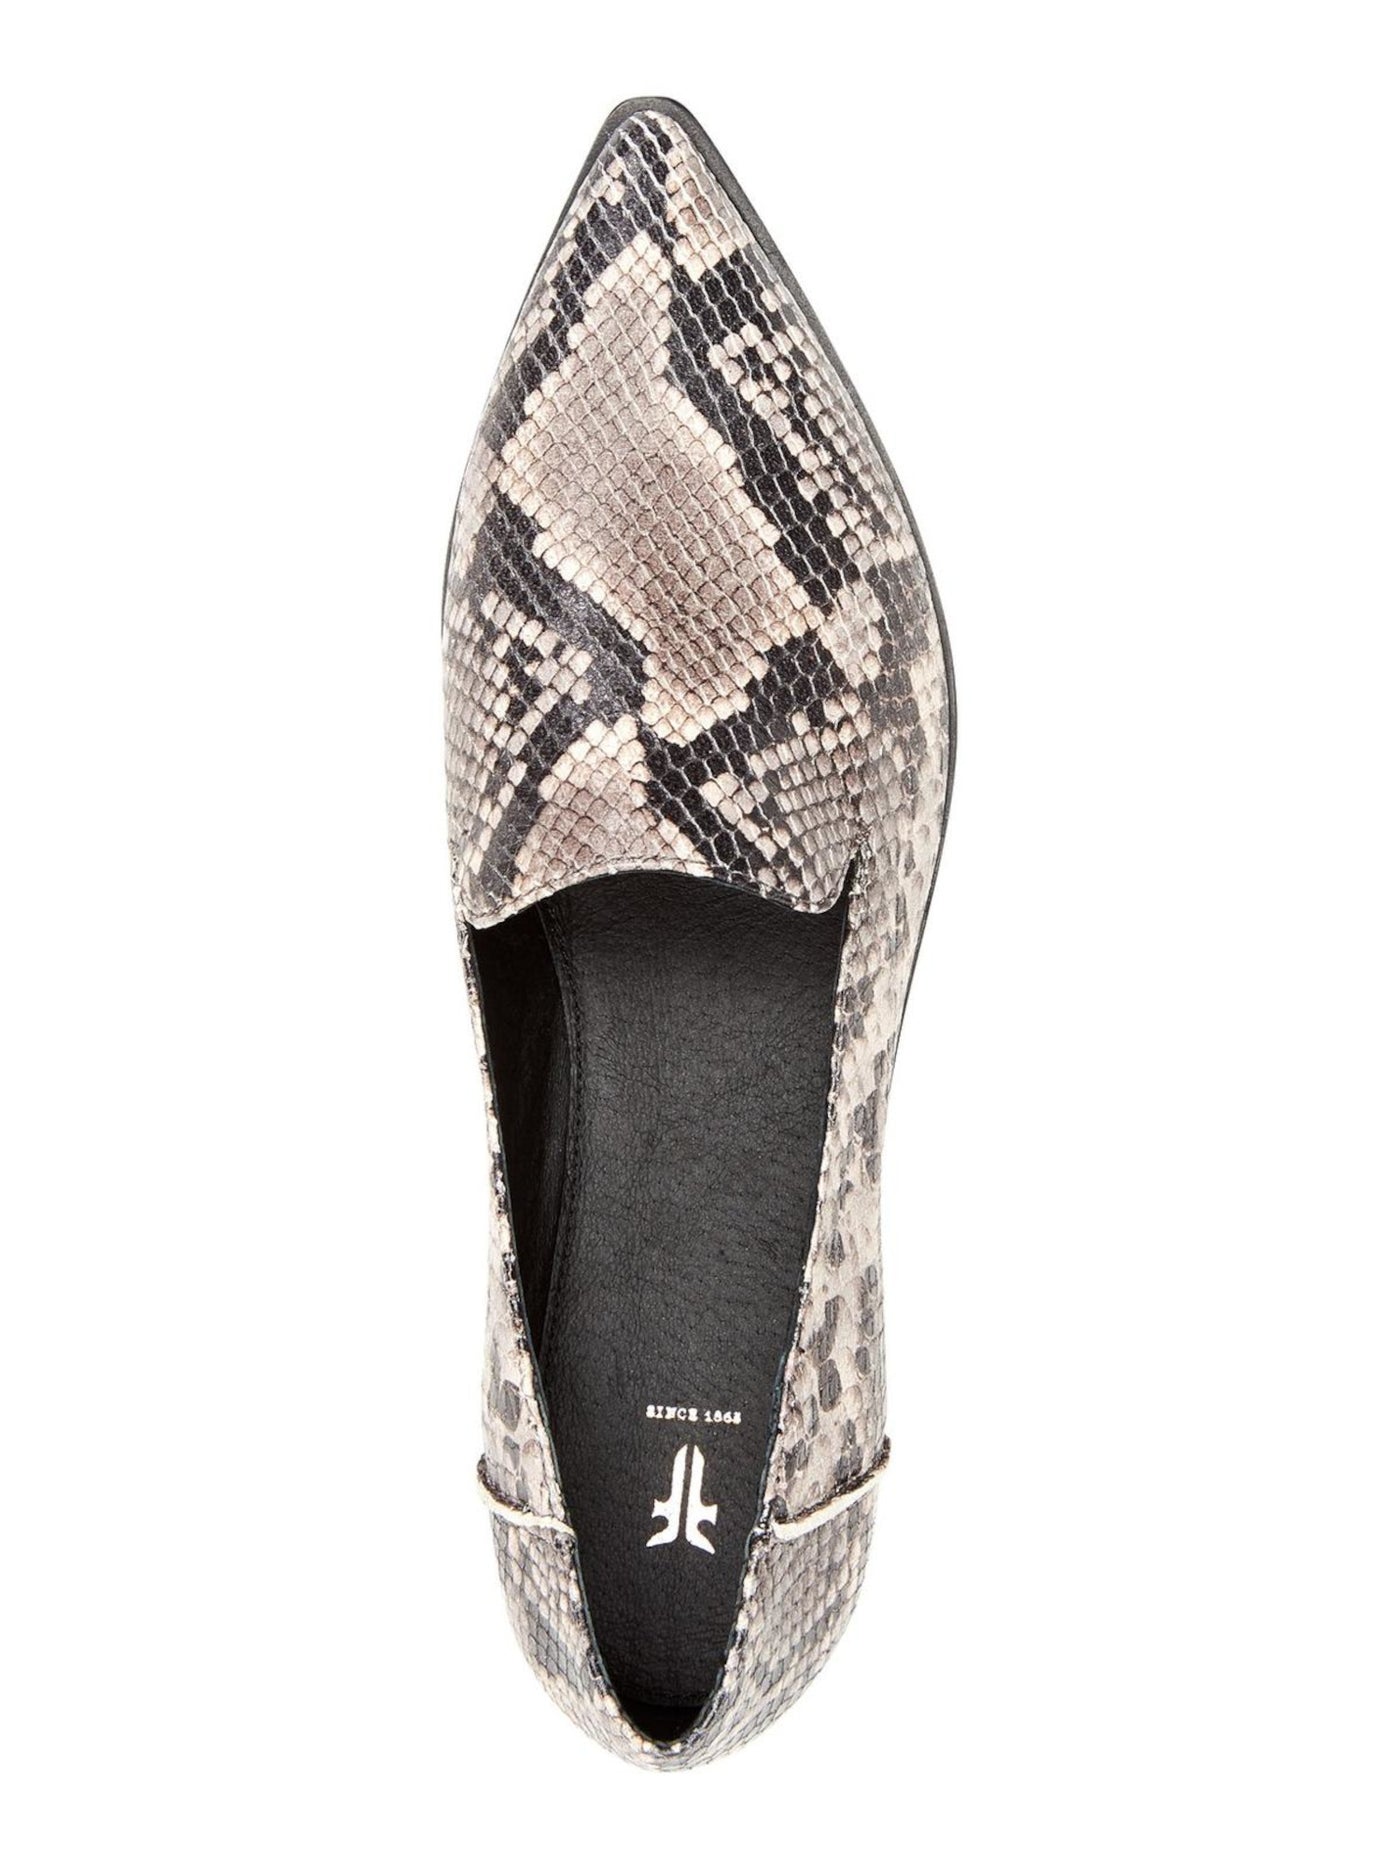 FRYE Womens Beige Snake Print Comfort Kenzie Pointed Toe Block Heel Slip On Leather Loafers Shoes 8 M